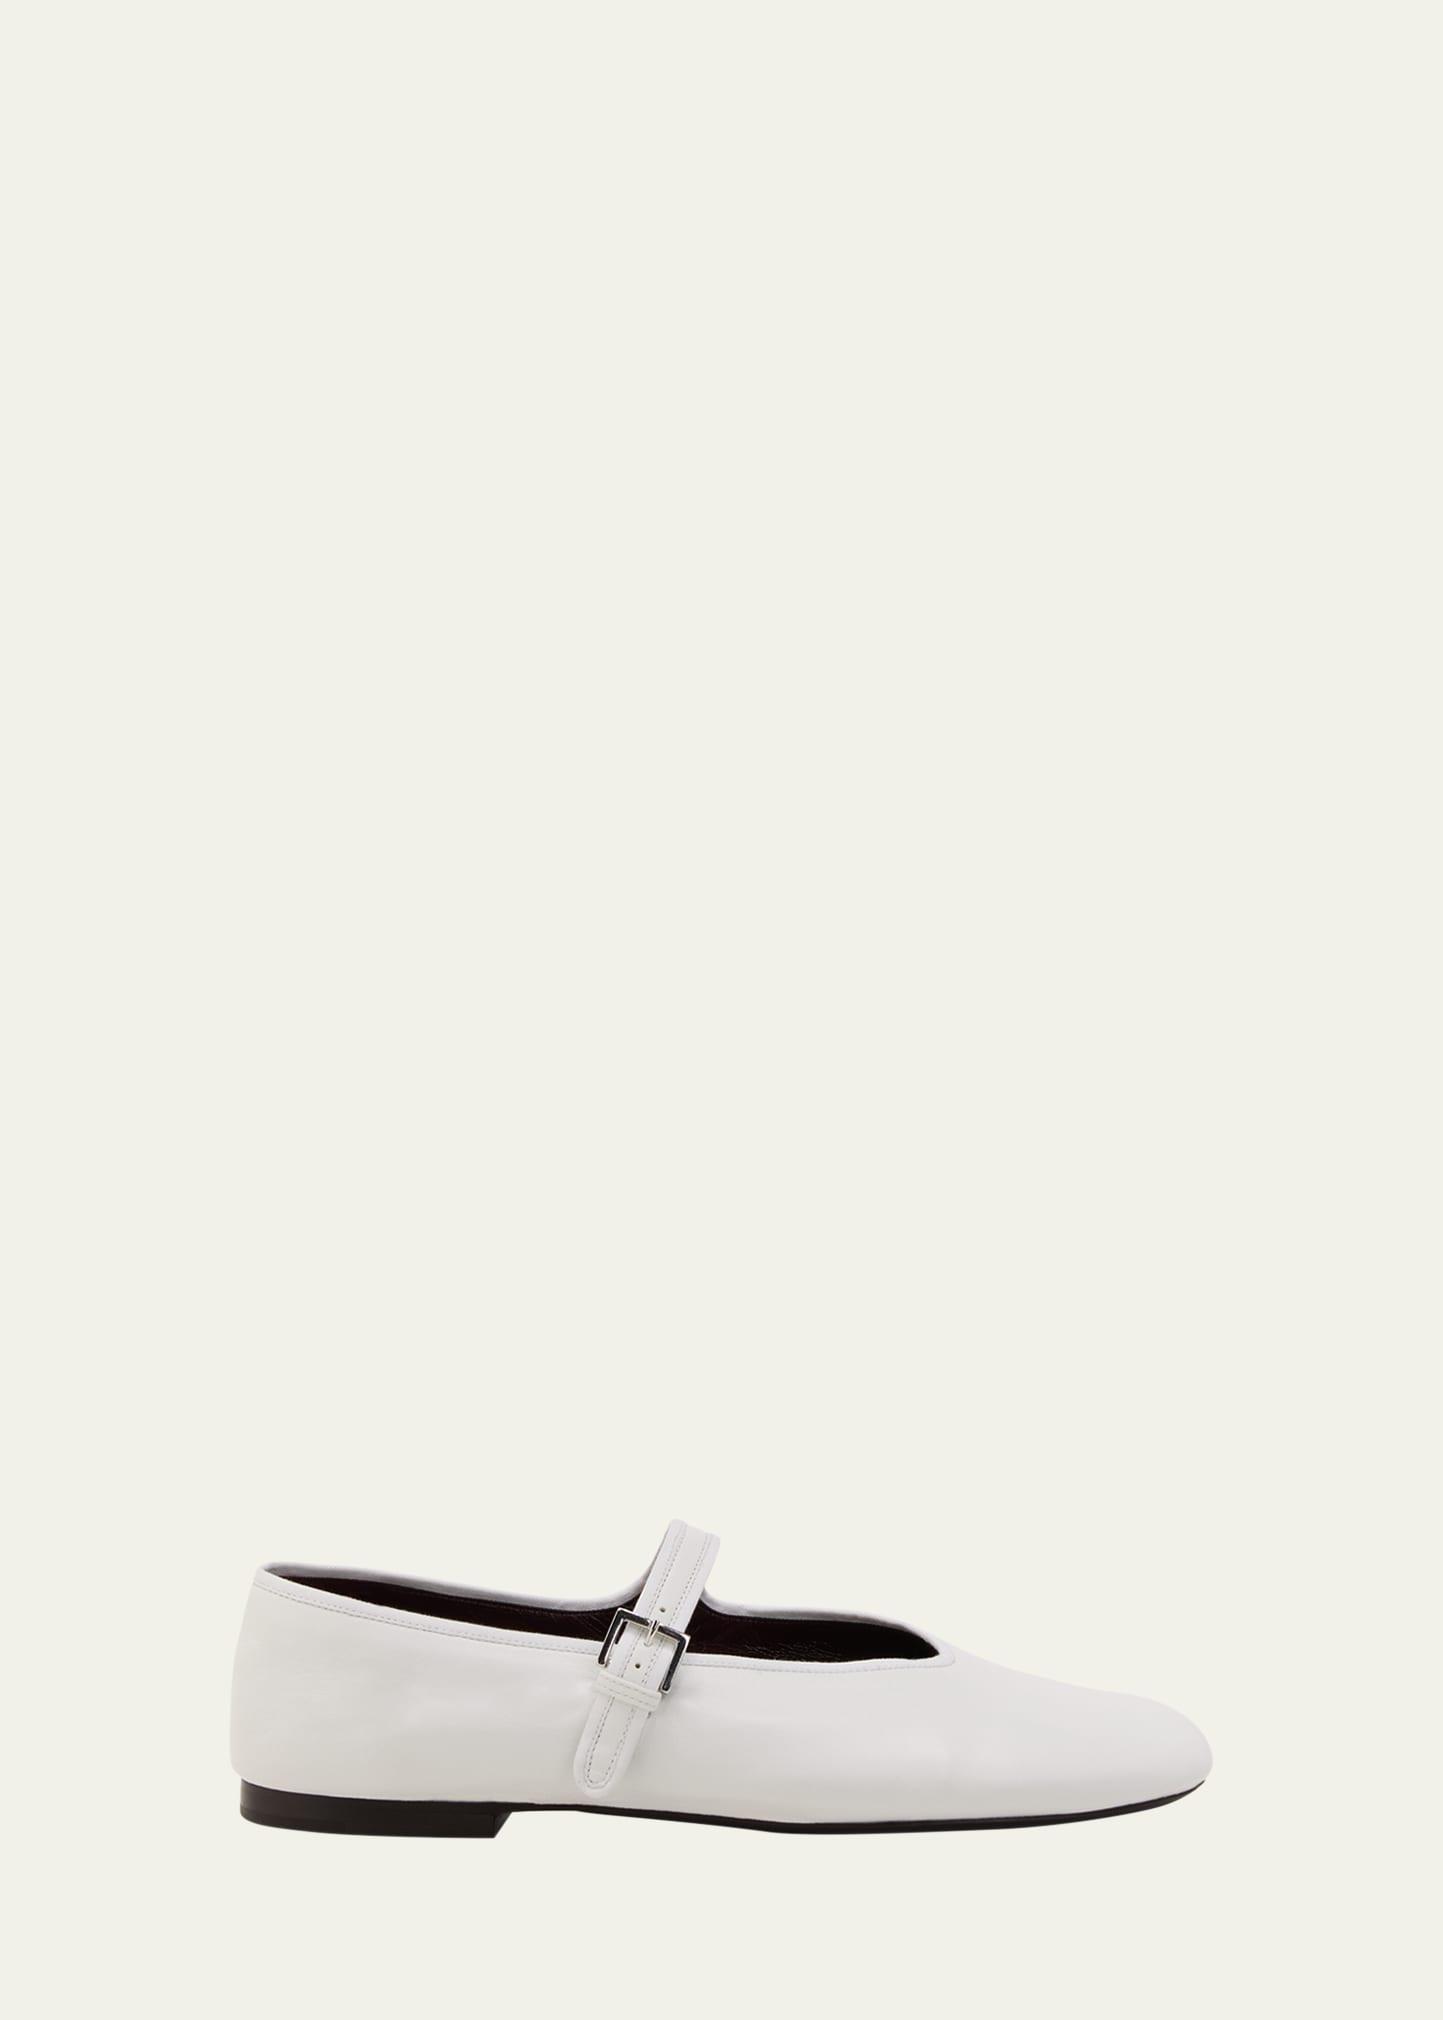 Christian Louboutin Dandelion Venetian Loafer Product Image